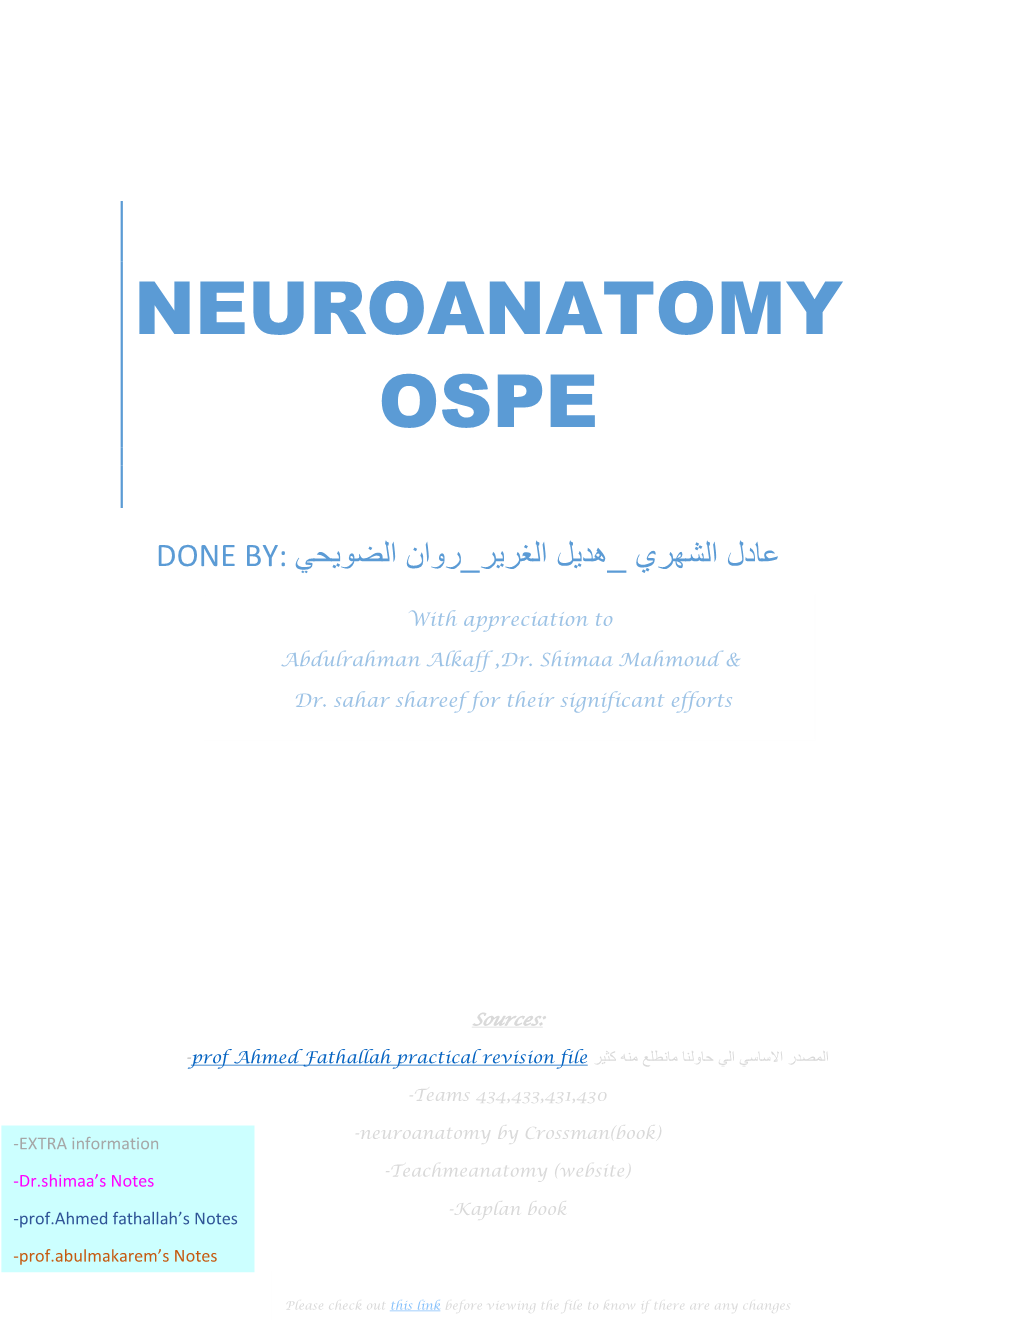 Neuroanatomy Ospe